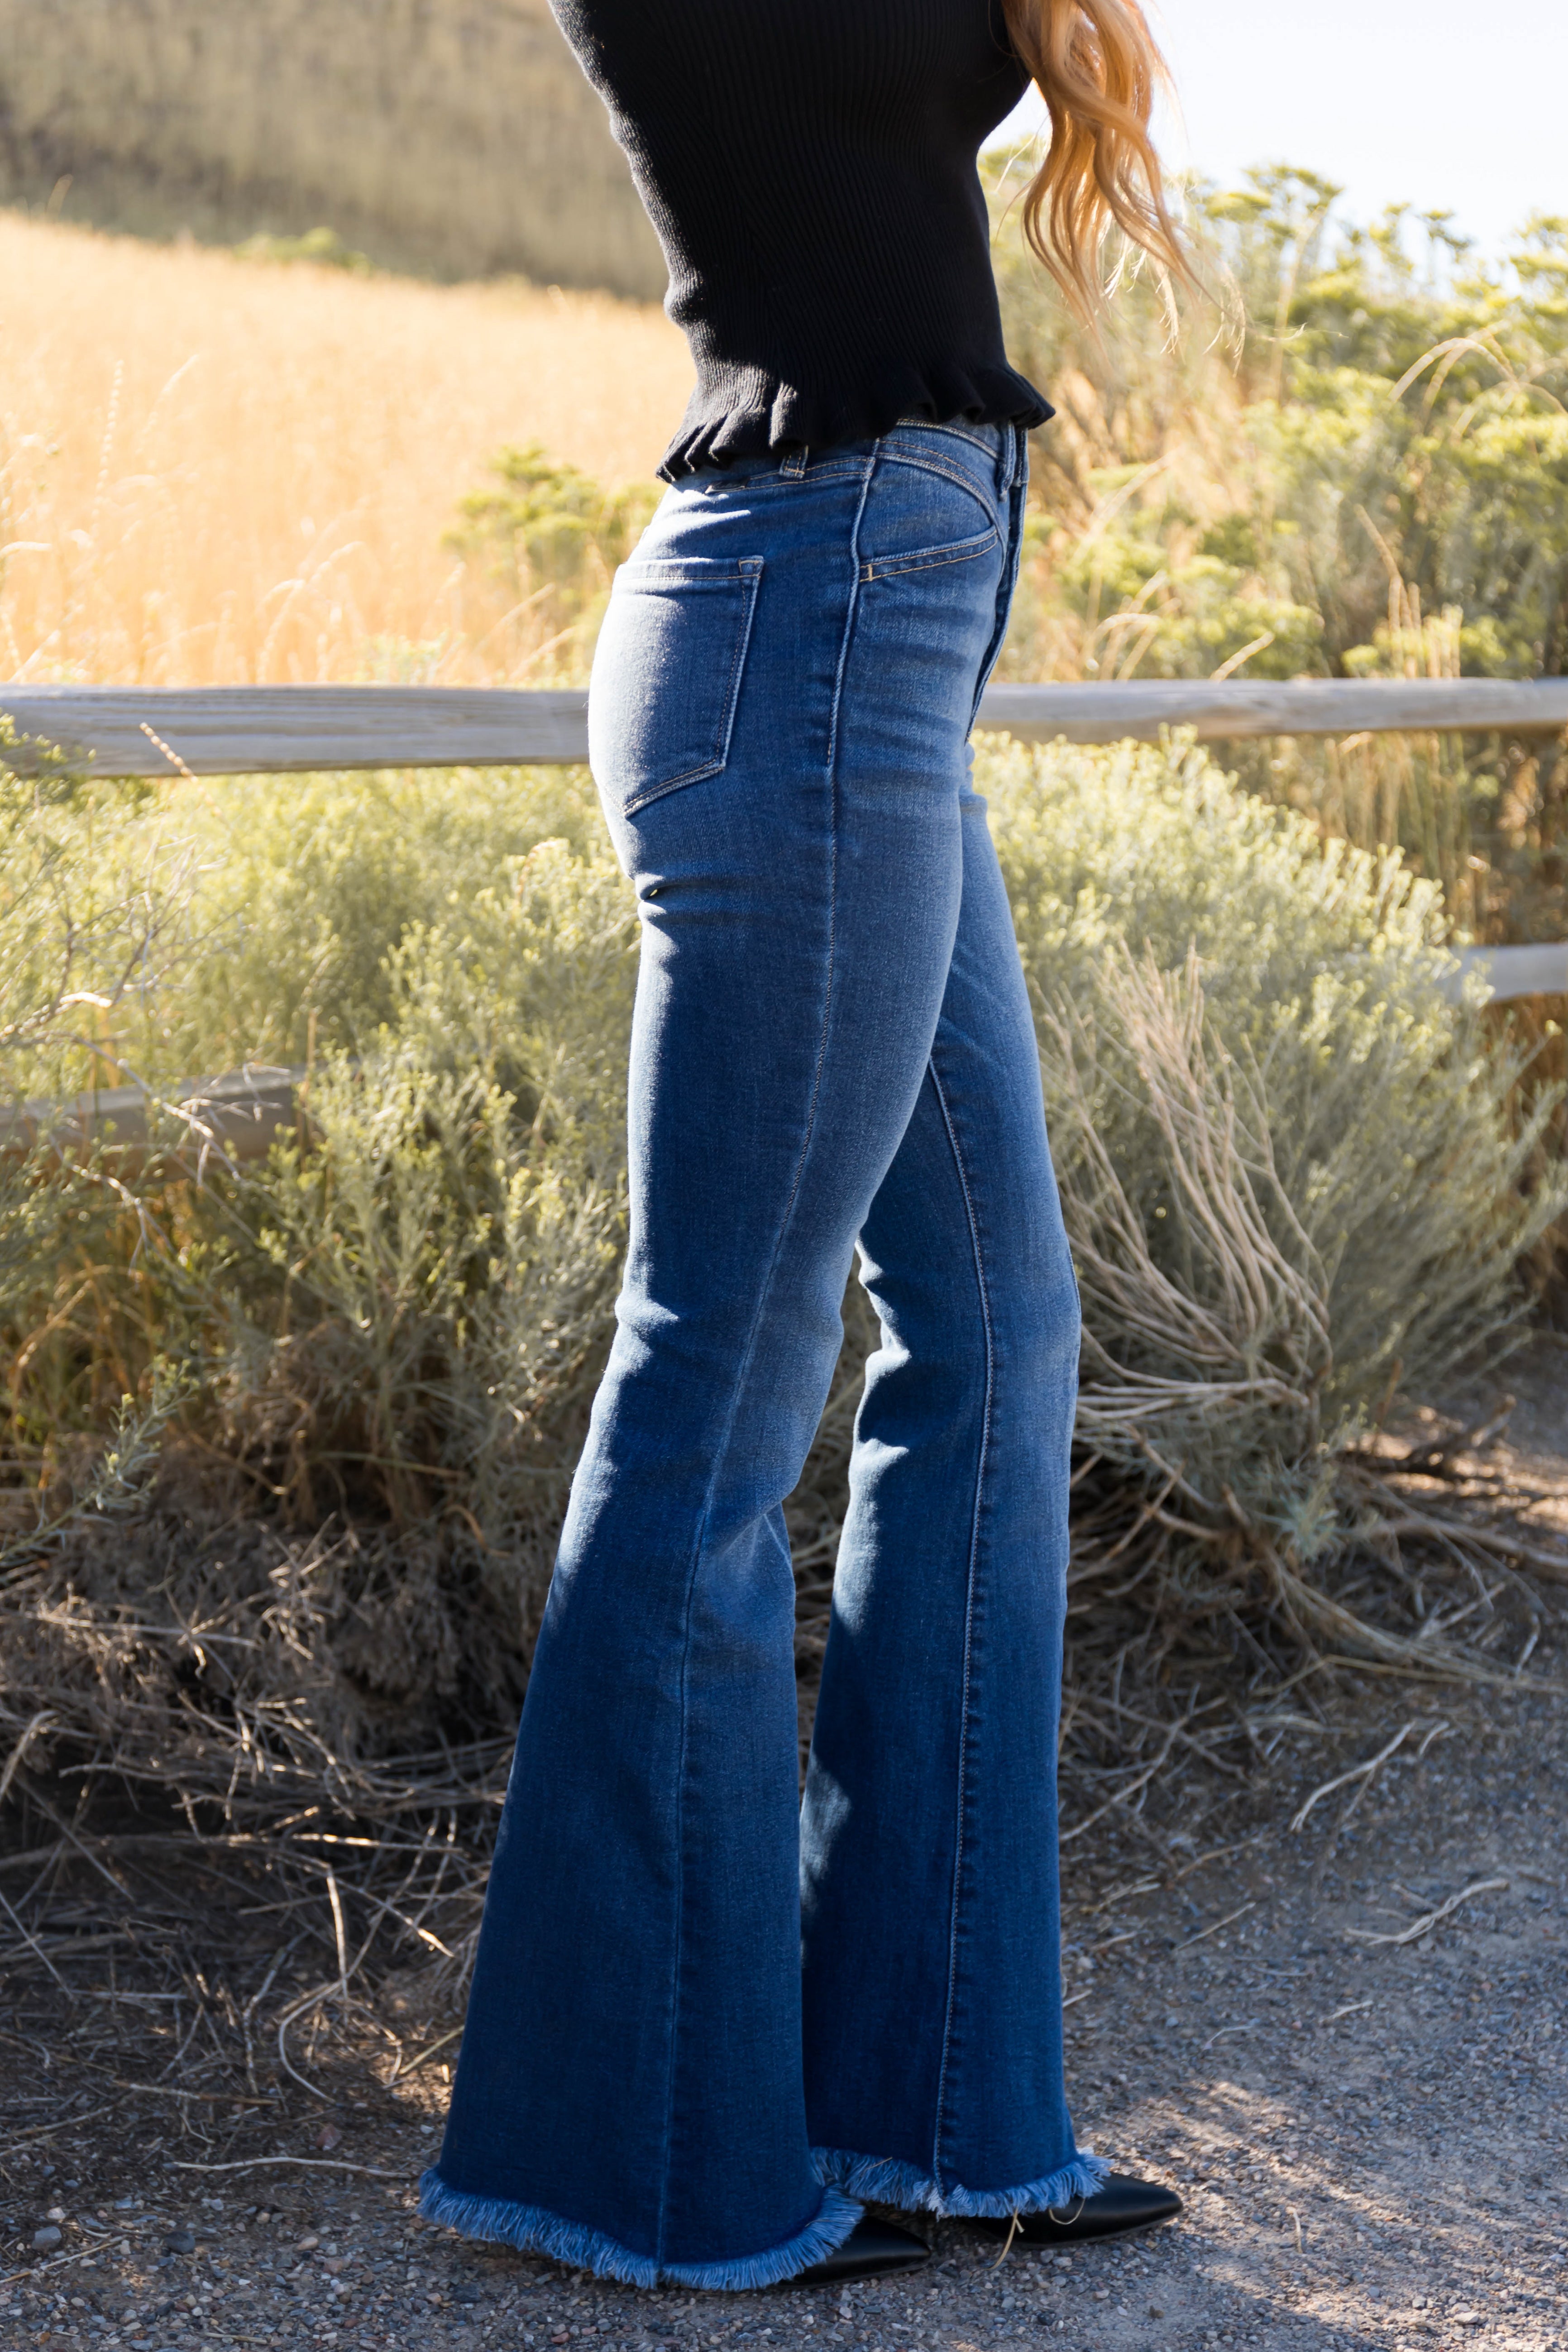 Buy Accalia Denim Bell Bottom Jeans for Women's, High Waist Regular Fit  Blue Wide Leg Jeans for Girl's, 26 at Amazon.in